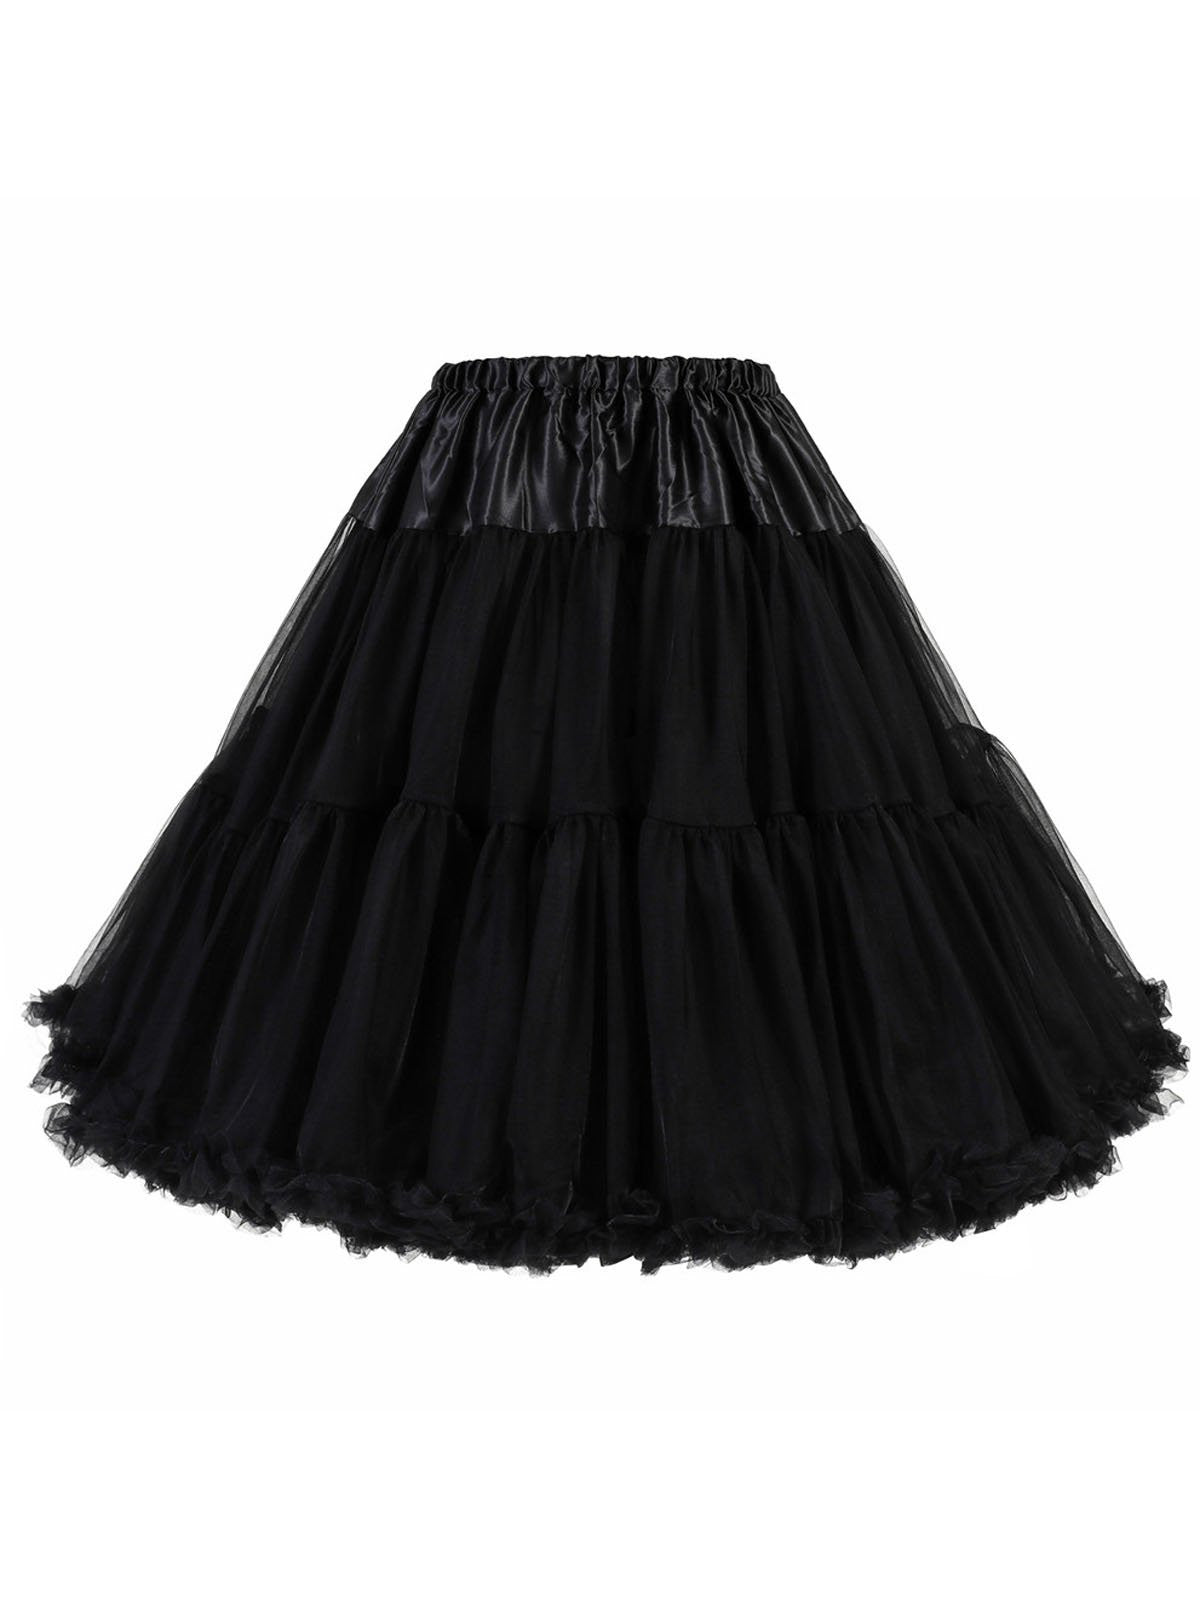 1950s Ruffled Petticoat Underskirt - Retro Stage - Chic Vintage Dresses ...